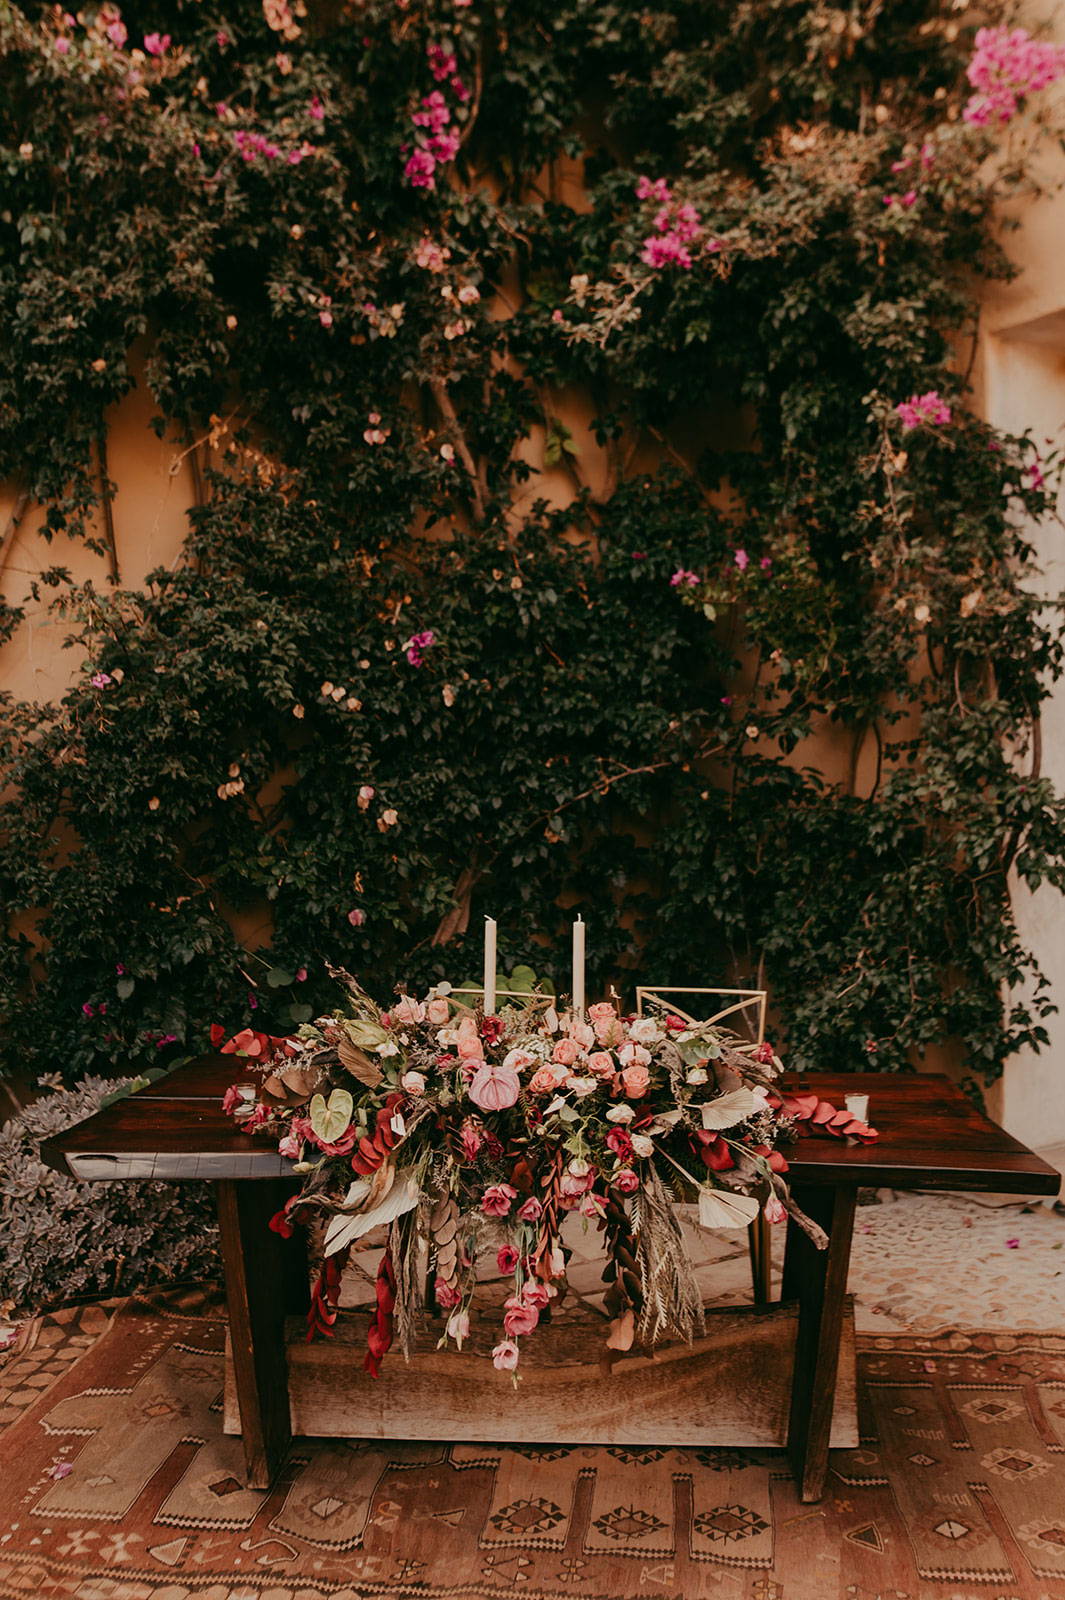 Floral arrangement on wooden table